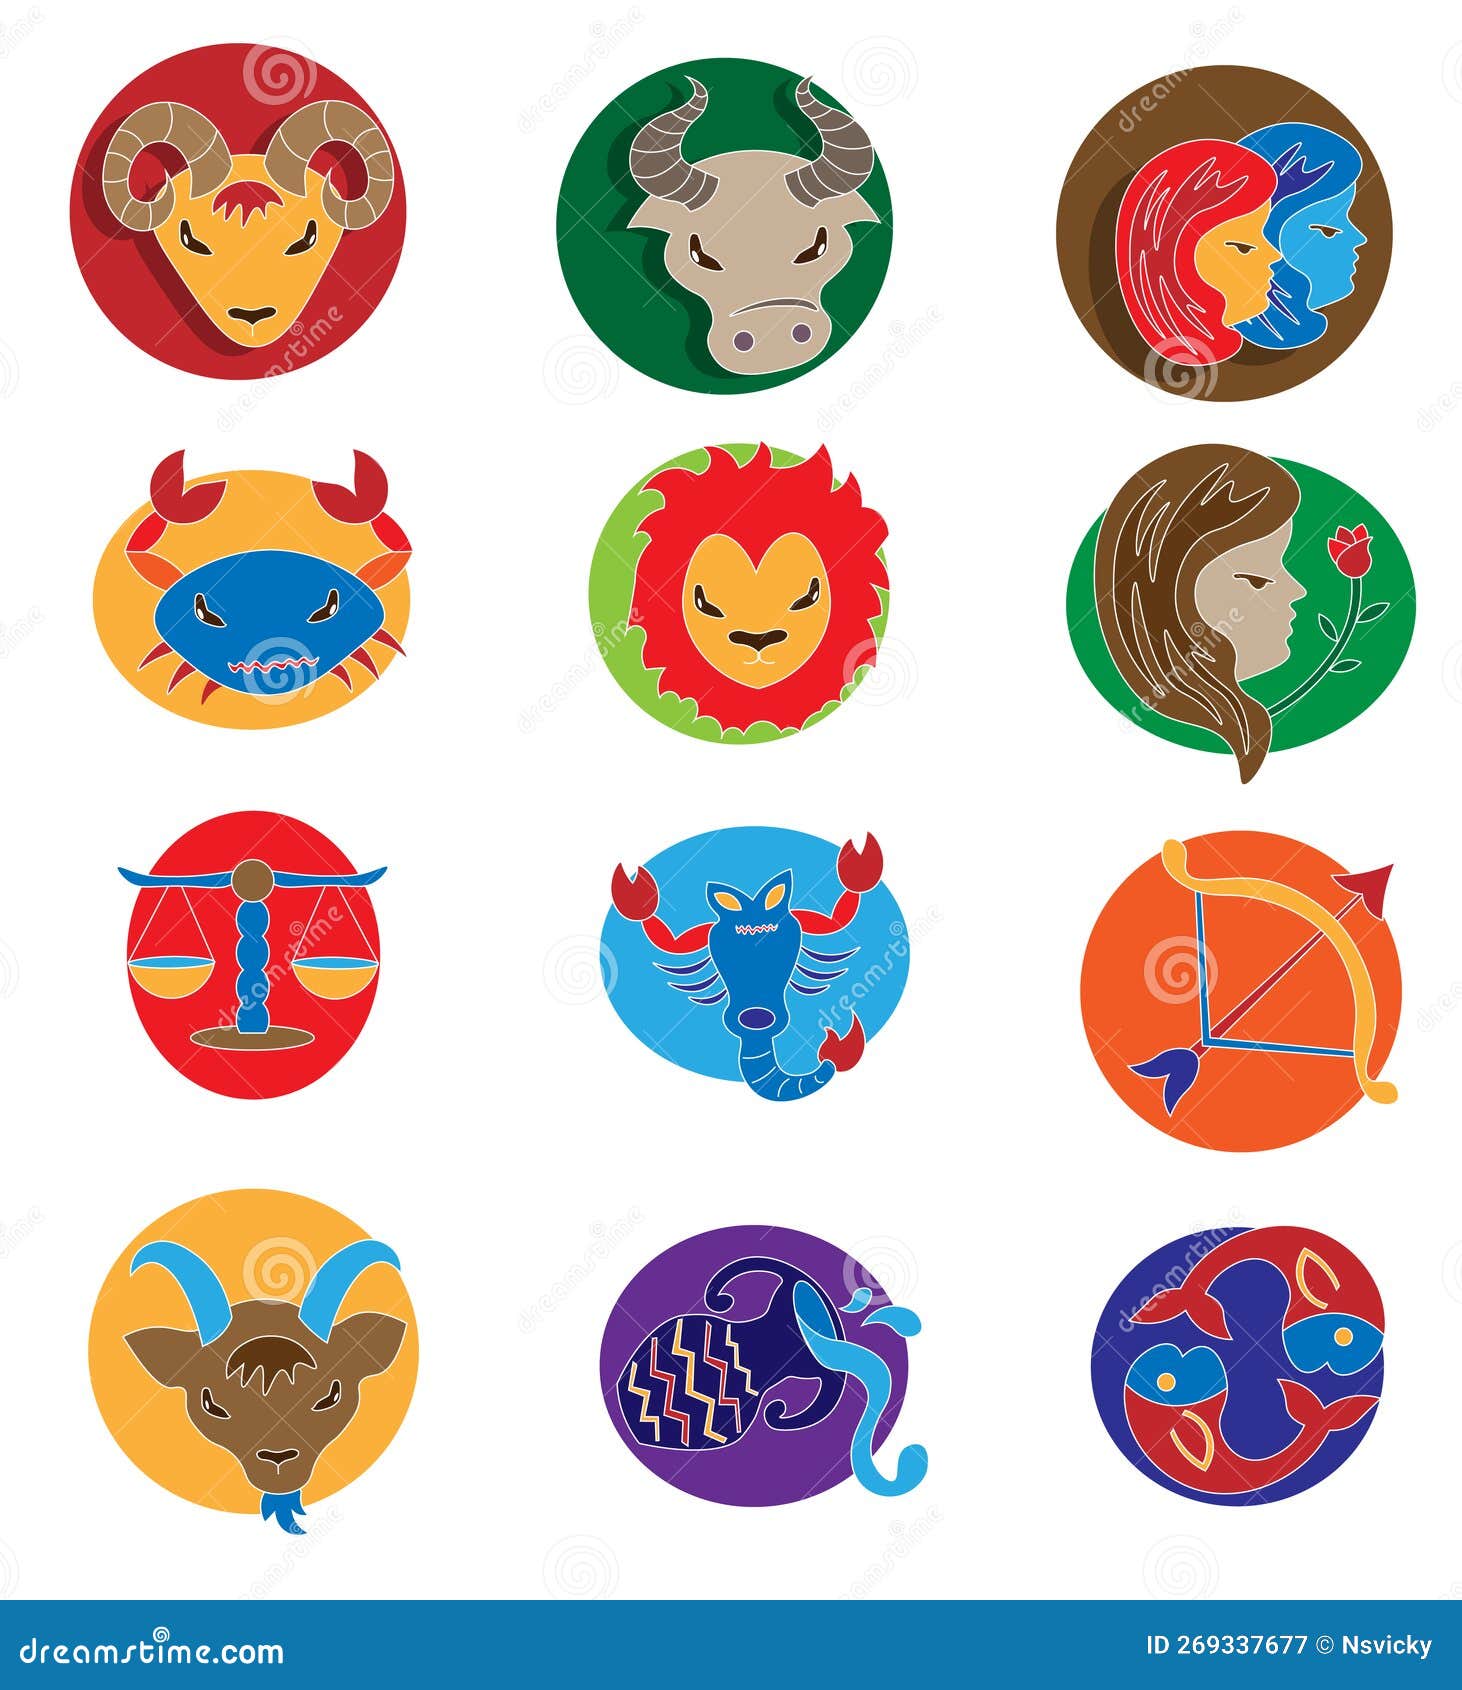 Astrology Symbols Drawing, All Twelve Signs. Stock Illustration ...